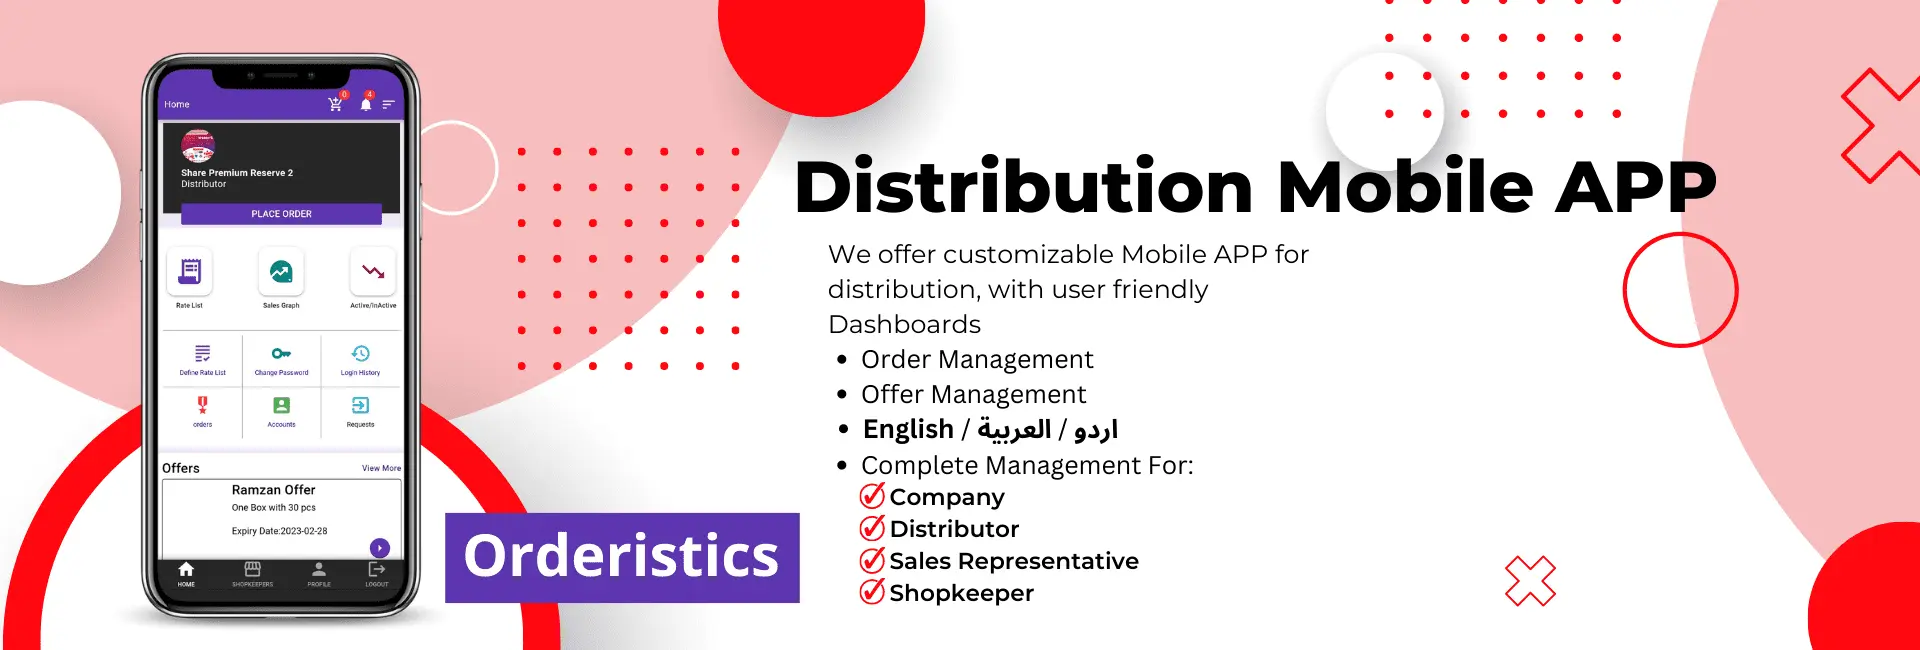 Distribution Mobie App